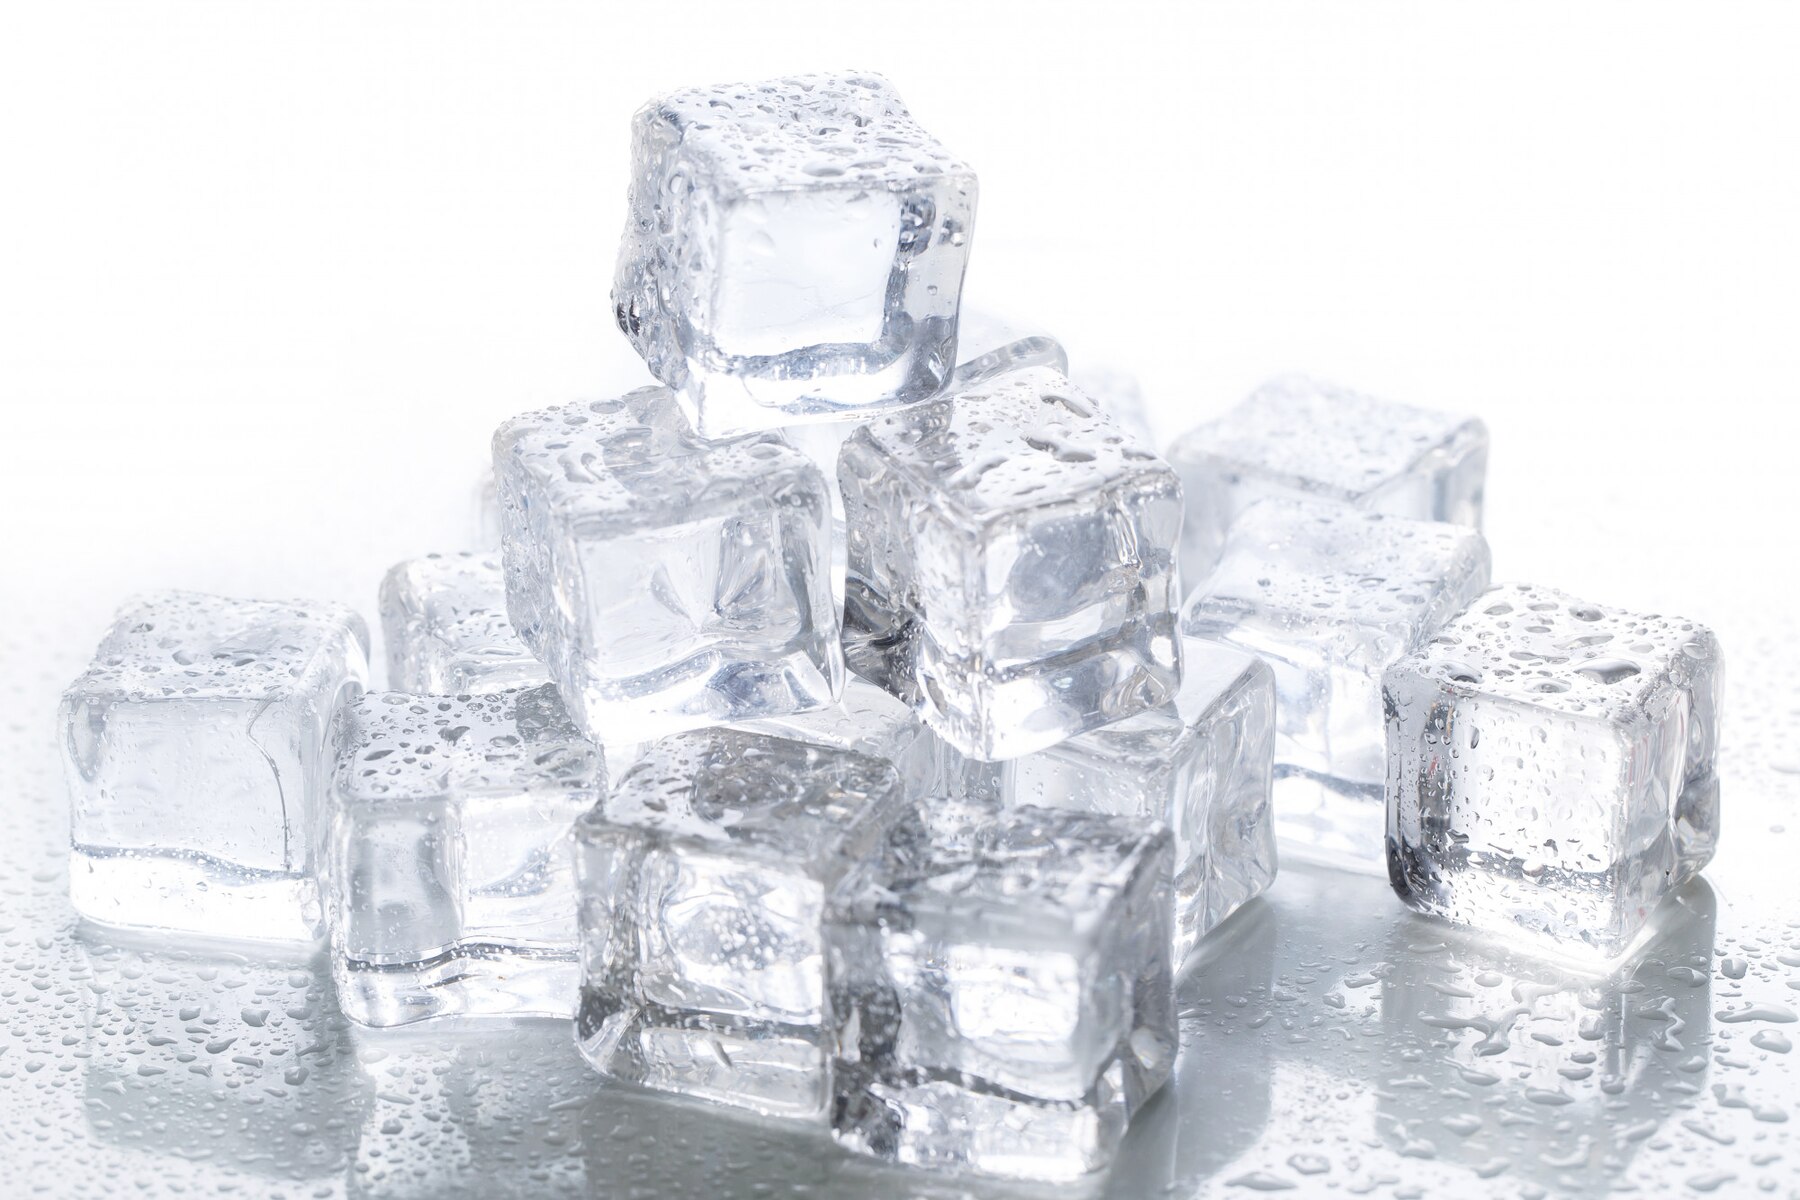 ice-cubes-on-the-table_144627-8769.jpg